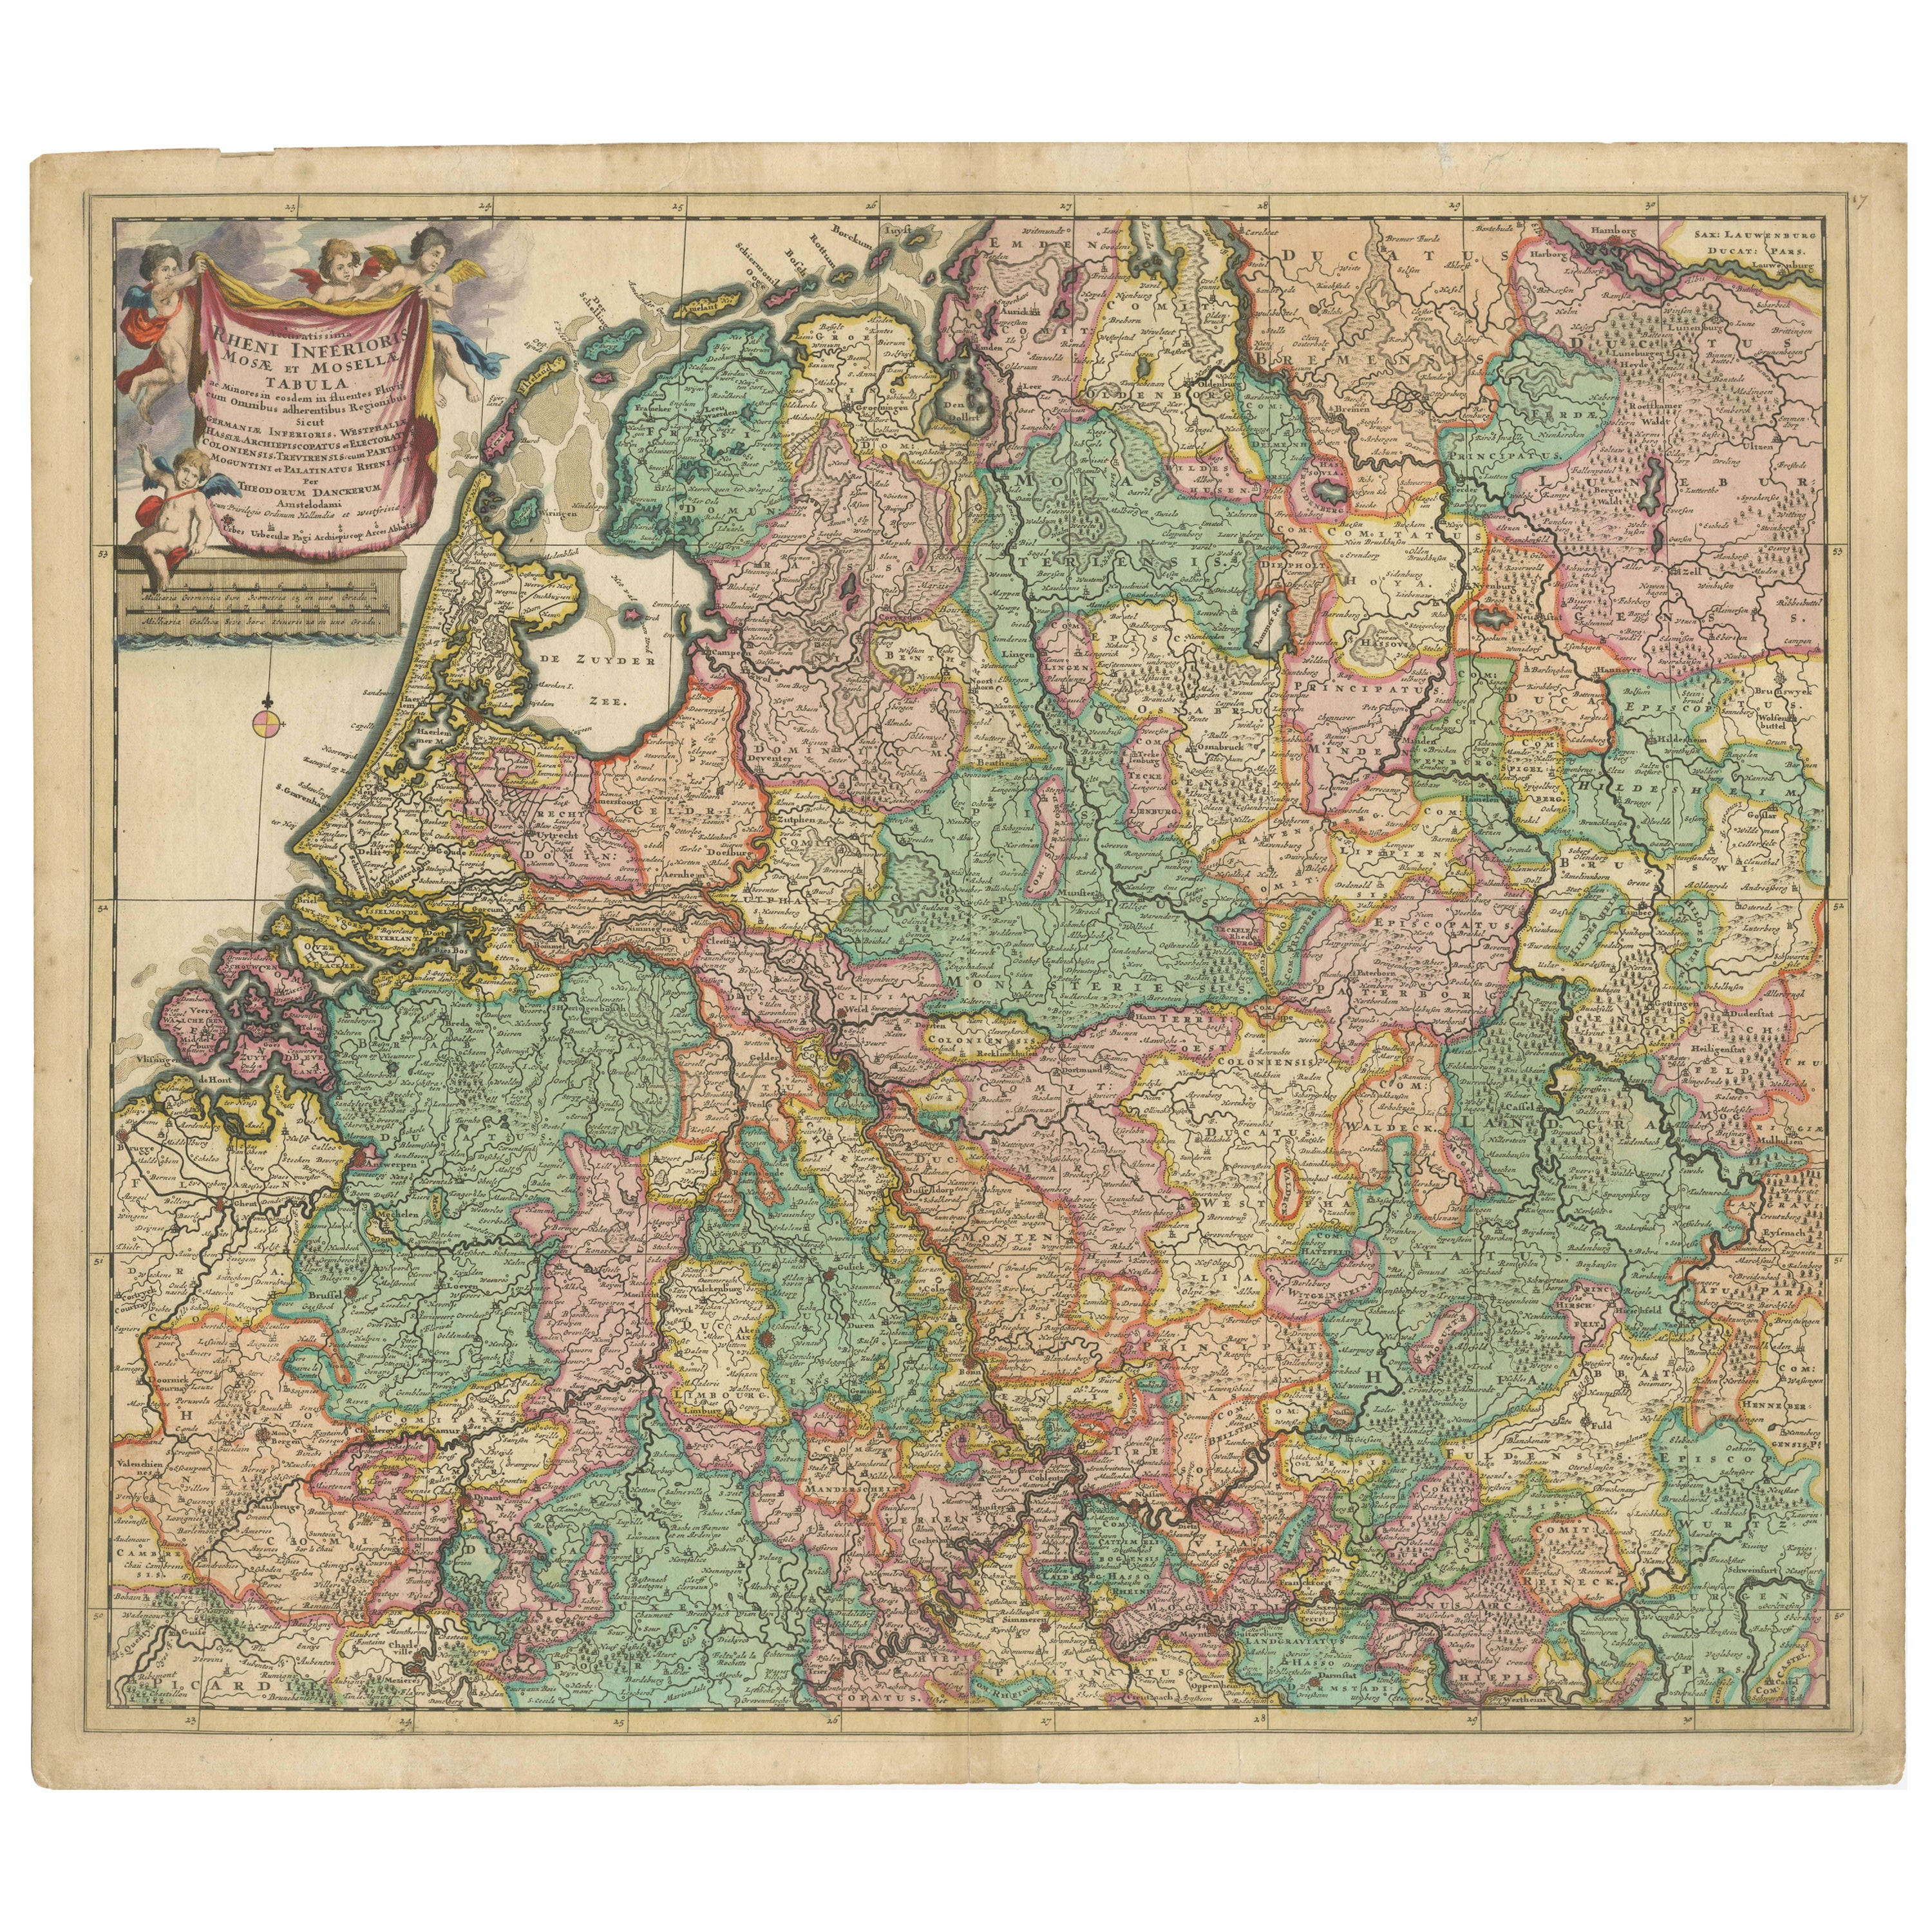 Engraved Map of the Lower Rhine, Meuse, Moselle, Scheldt, Ems & Weser, c.1700